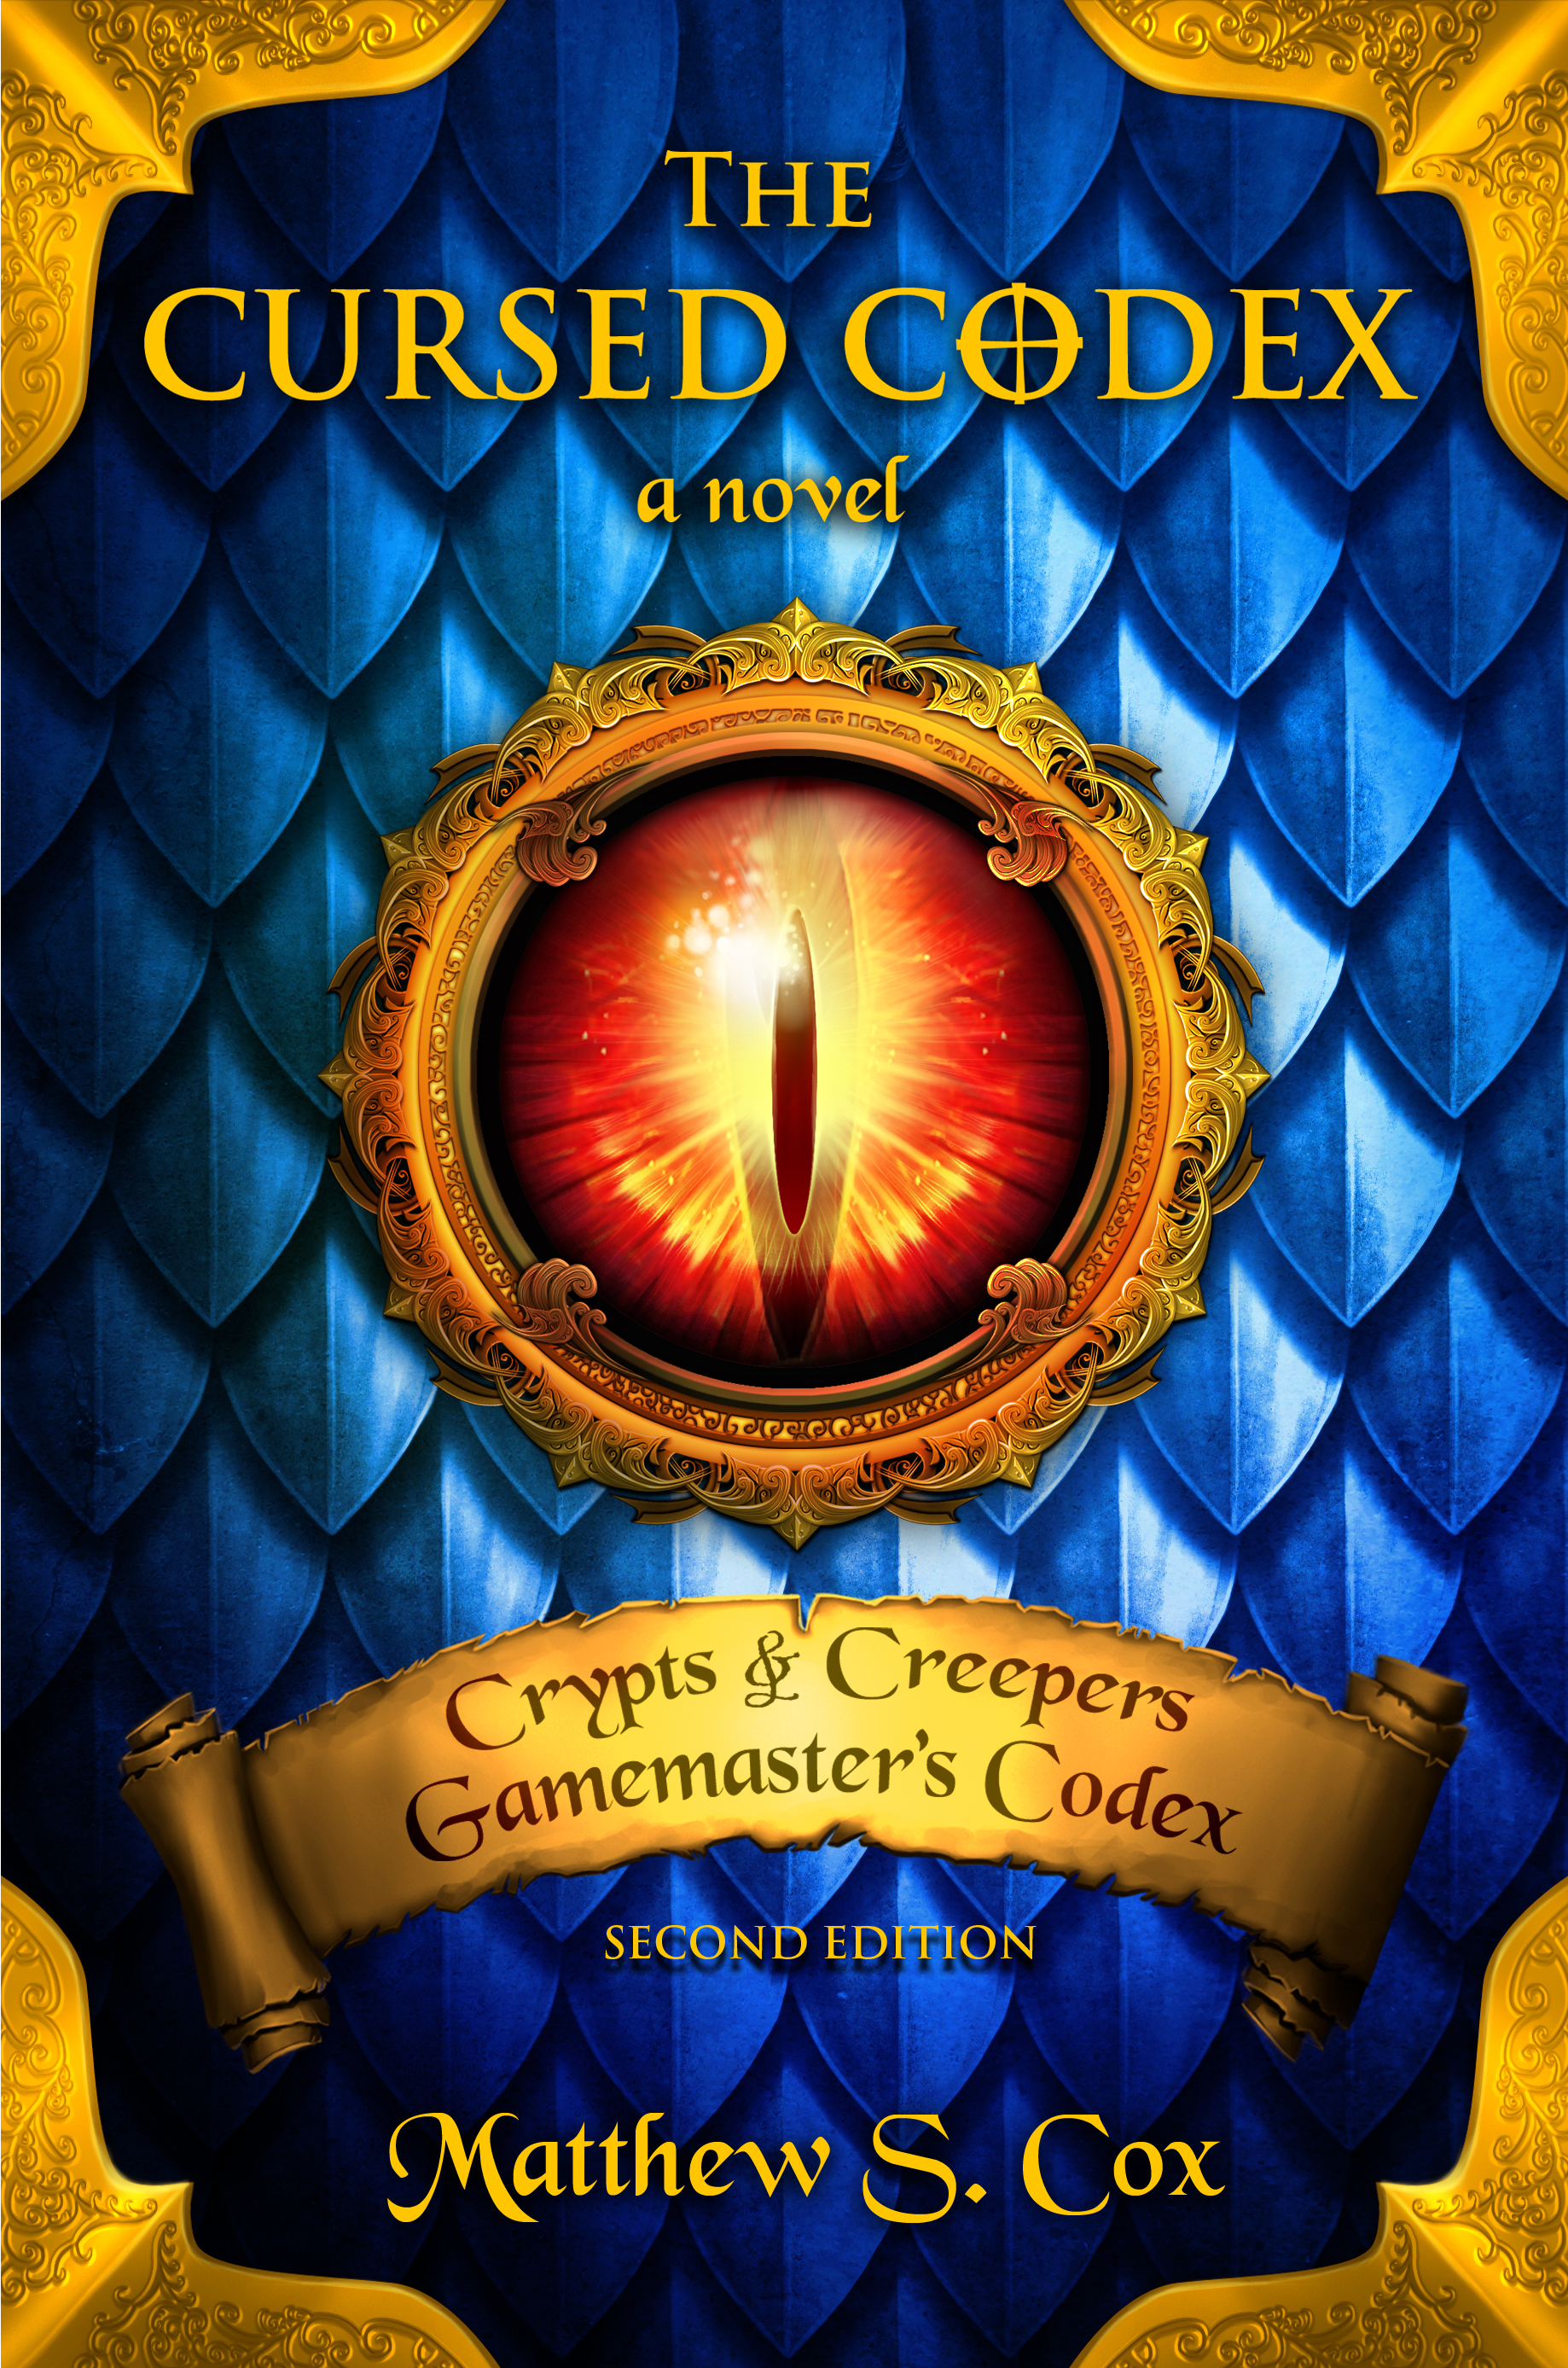 LitRPG novel for middle grade readers. Fantasy, gaming, and humor.